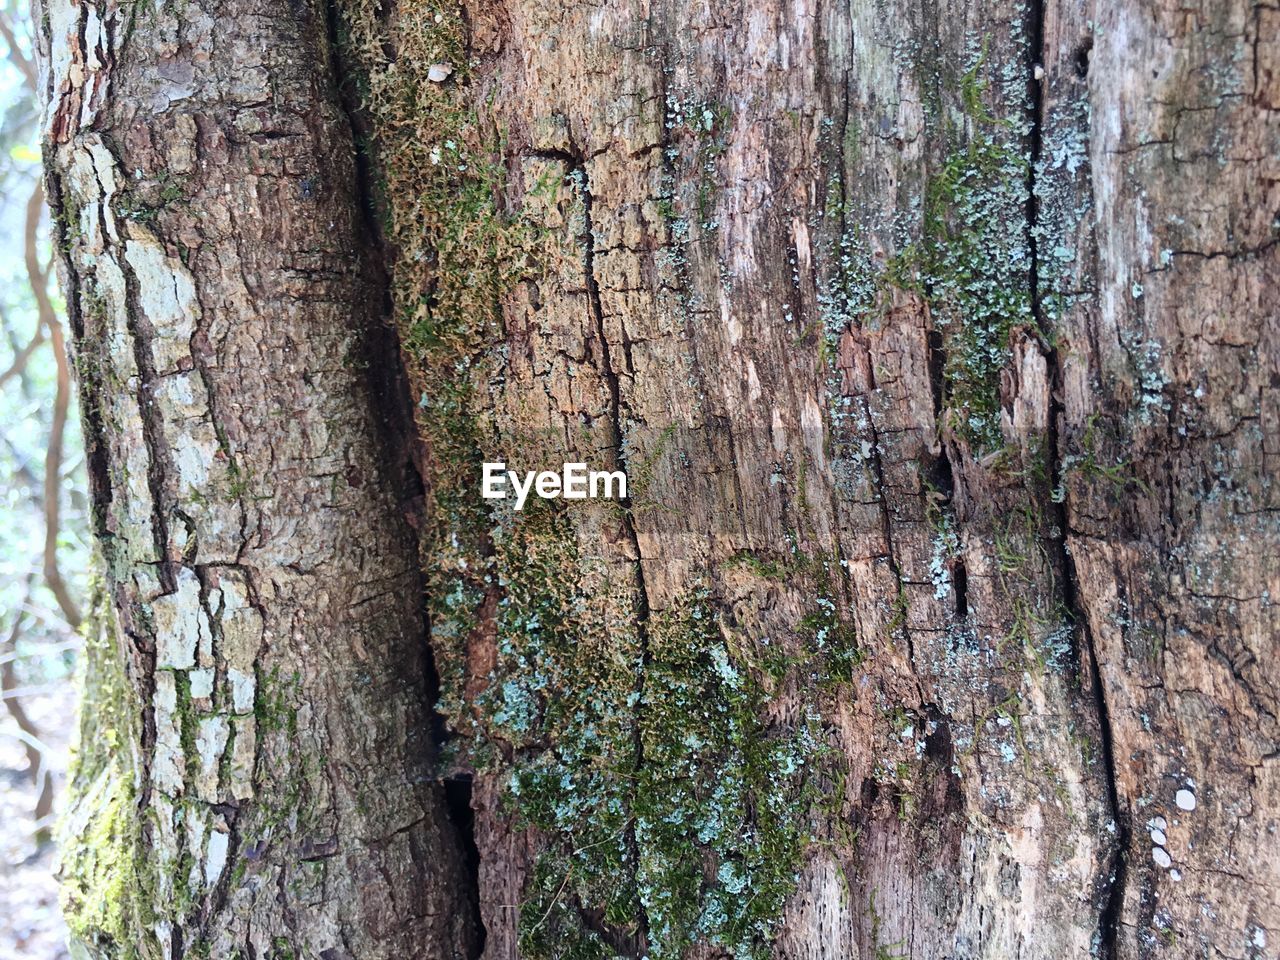 Moss growing on tree trunk